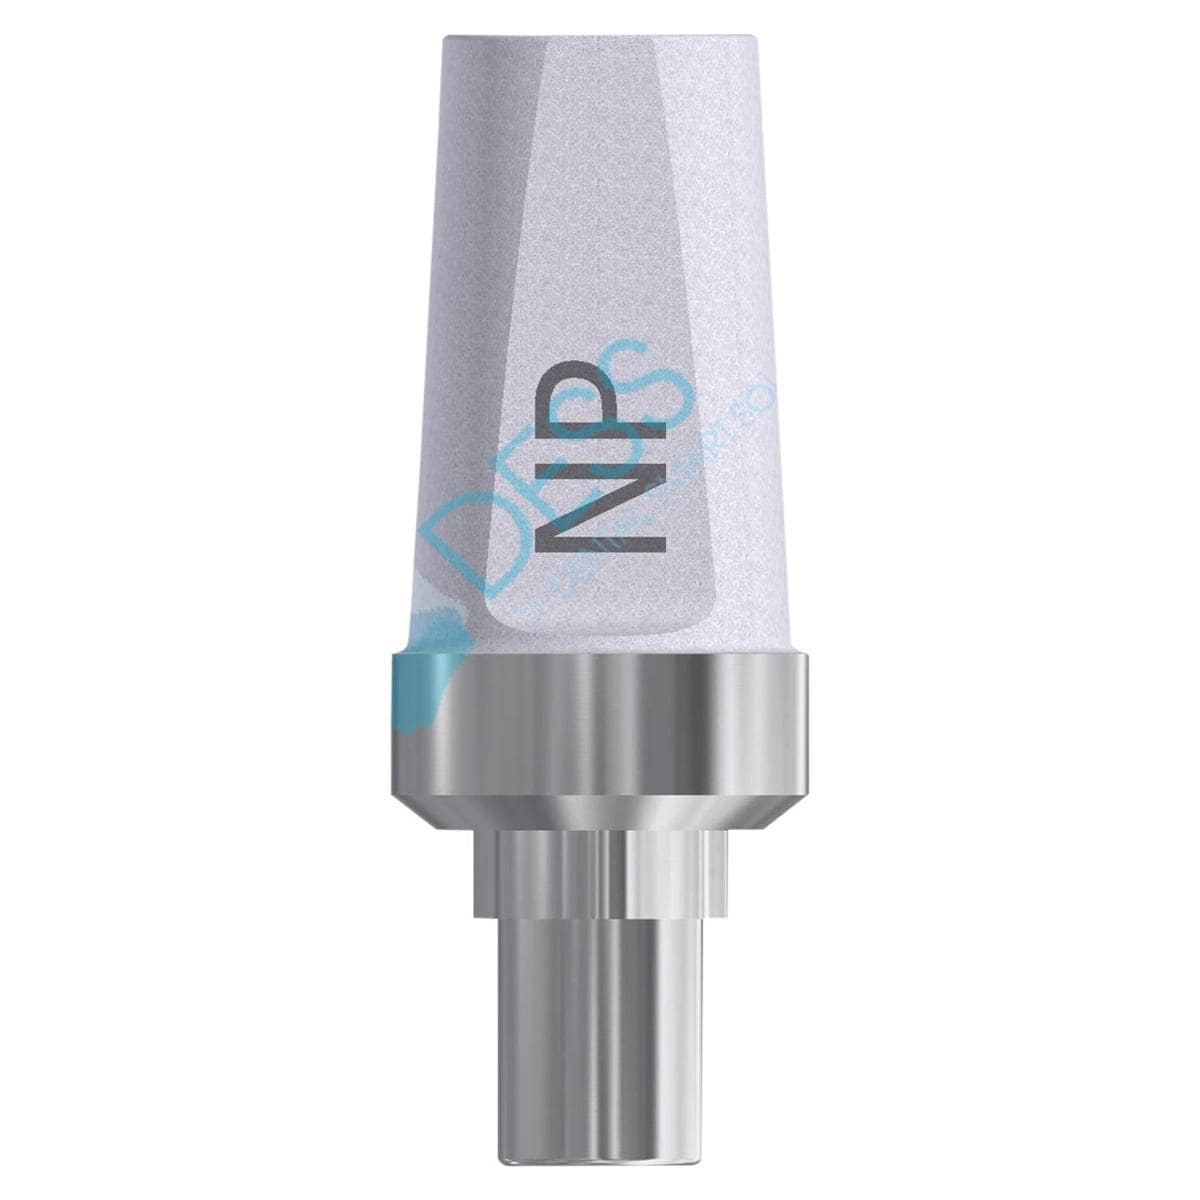 Titanabutment - kompatibel mit Nobel Replace Select™ - NP Ø 3,5 mm, 0° gewinkelt